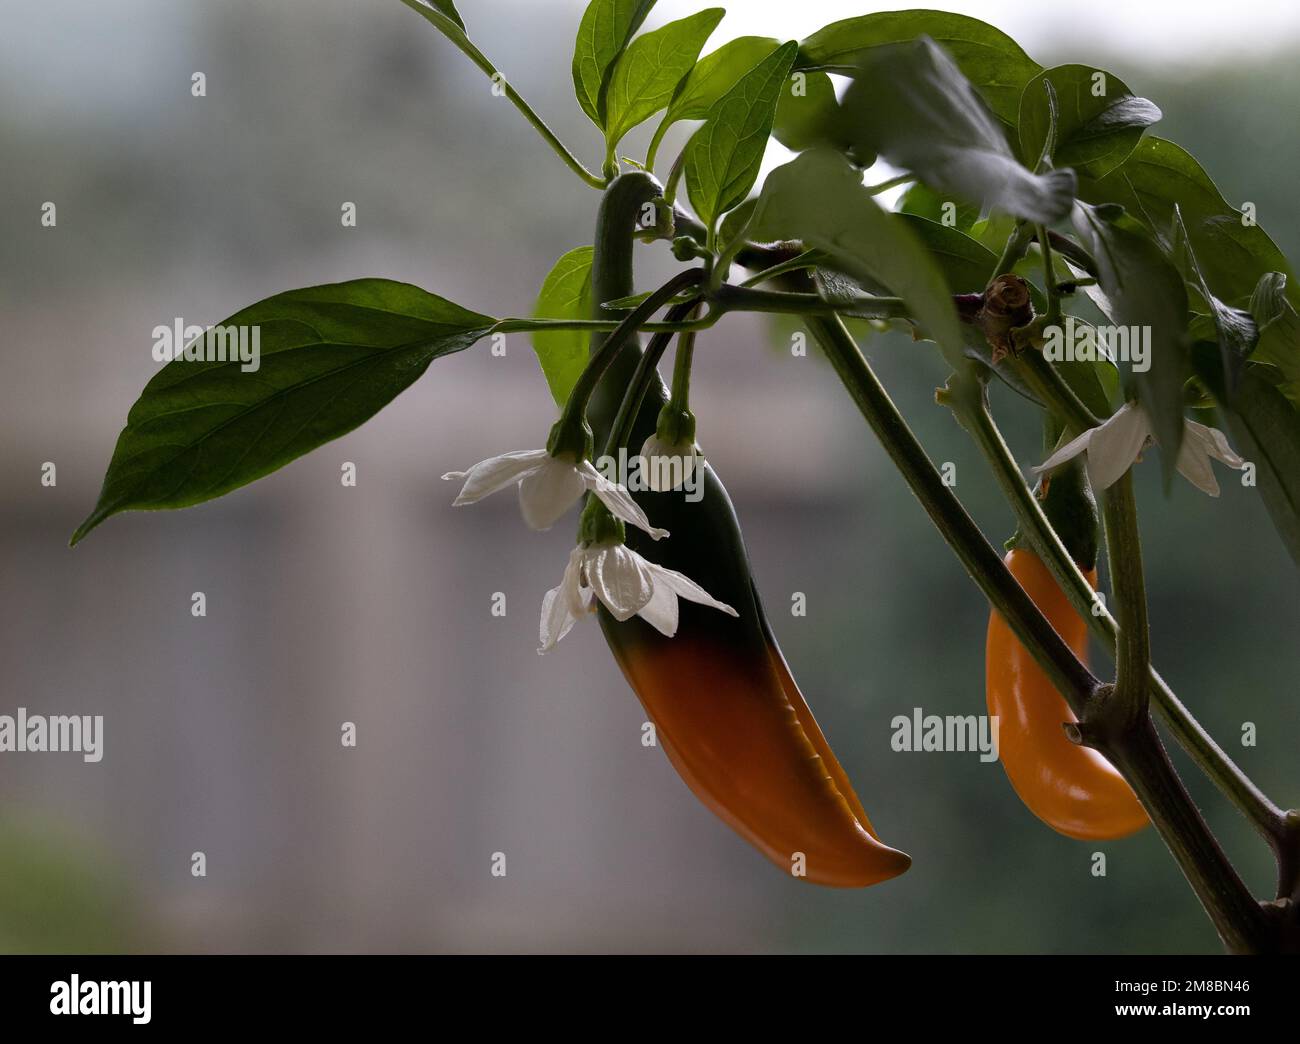 Chilli pepper flowers Stock Photo